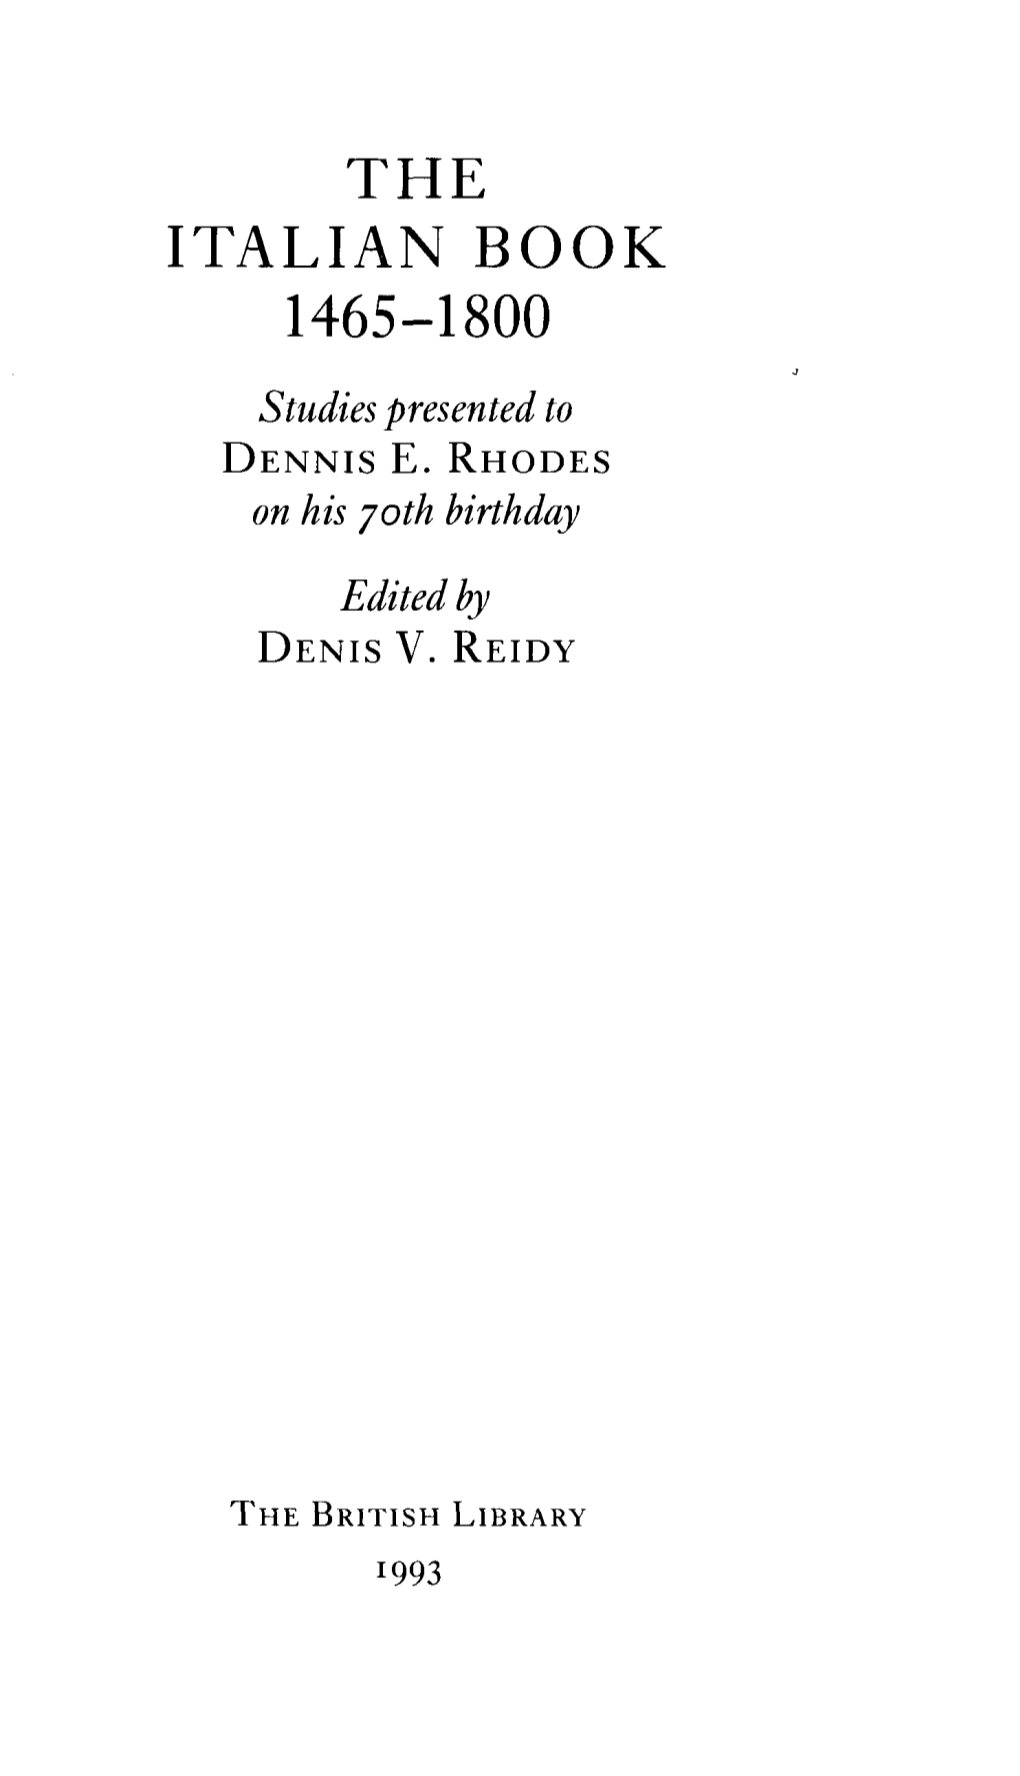 THE ITALIAN BOOK 1465-1800 Studies Presented to DENNIS E